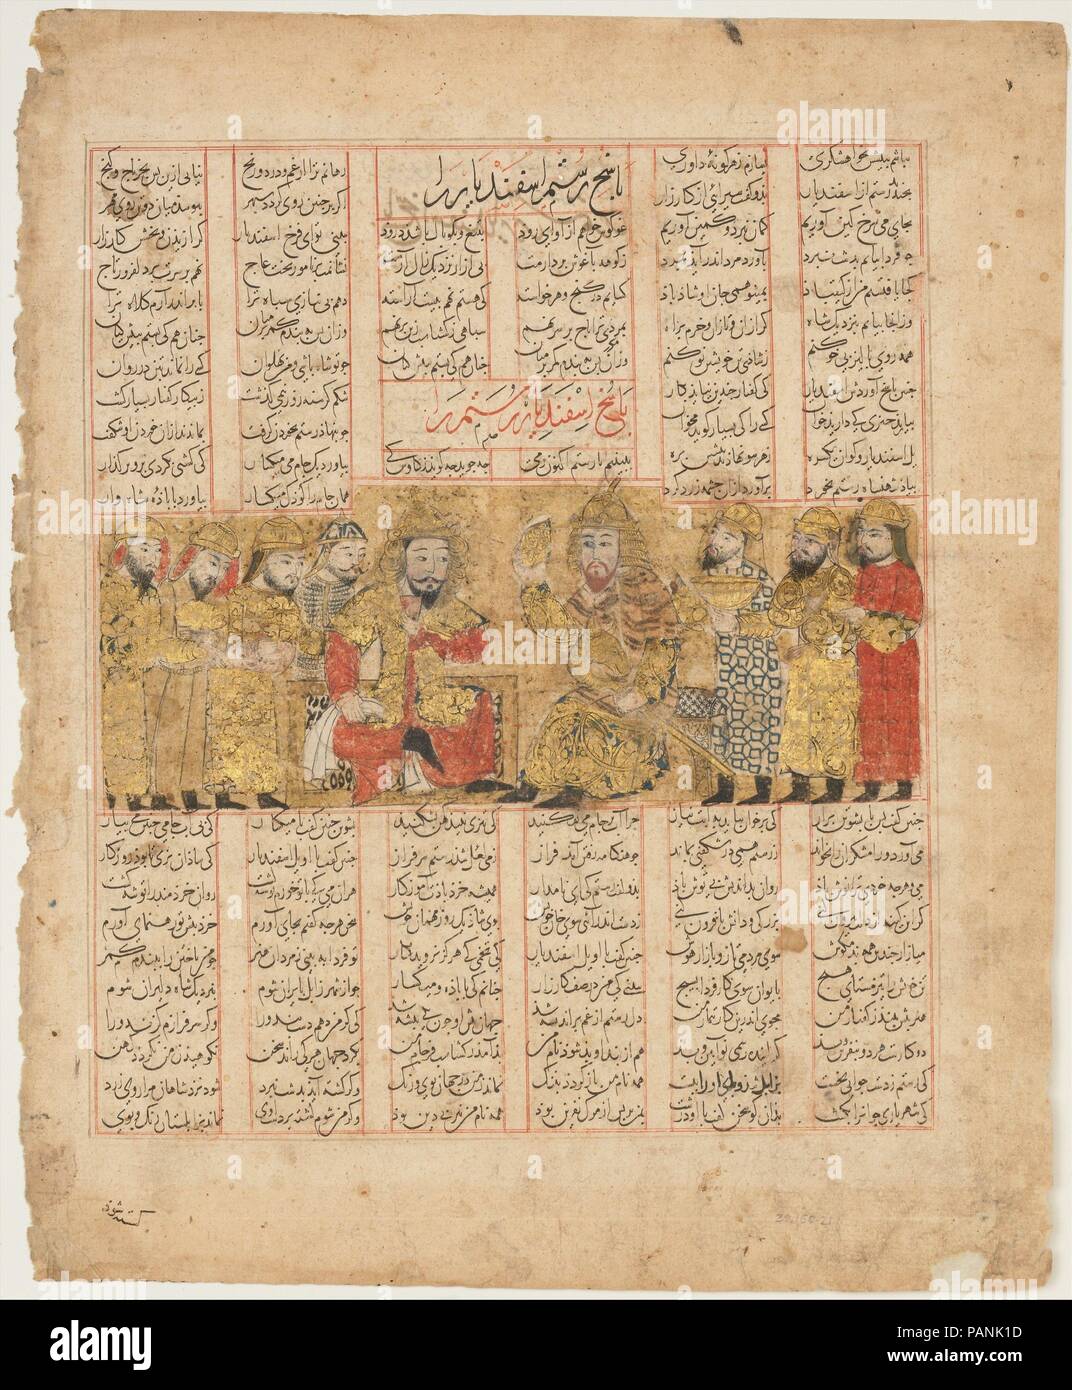 'Rustam Discoursing with Isfandiyar', Folio from a Shahnama (Book of Kings). Author: Abu'l Qasim Firdausi (935-1020). Calligrapher: Hasan ibn Muhammad ibn `Ali ibn (?) Husaini, known as al-Mausili. Dimensions: Painting with Text Block: H.11 1/2 in. (29.2 cm)   W. 9 1/2 in. (24.1 cm)  Page: H.14 5/8 in. (37.1 cm)  W. 11 3/4 in. (29.8 cm)  Mat: H. 19 1/4 in. (48.9 cm)   W. 14 1/4 in. (36.2 cm). Patron: Commissioned by al-Hasan Qawam al-Daula wa'l-Din (ca. 1303-57). Date: dated A.H. 741/A.D. 1341. Museum: Metropolitan Museum of Art, New York, USA. Stock Photo